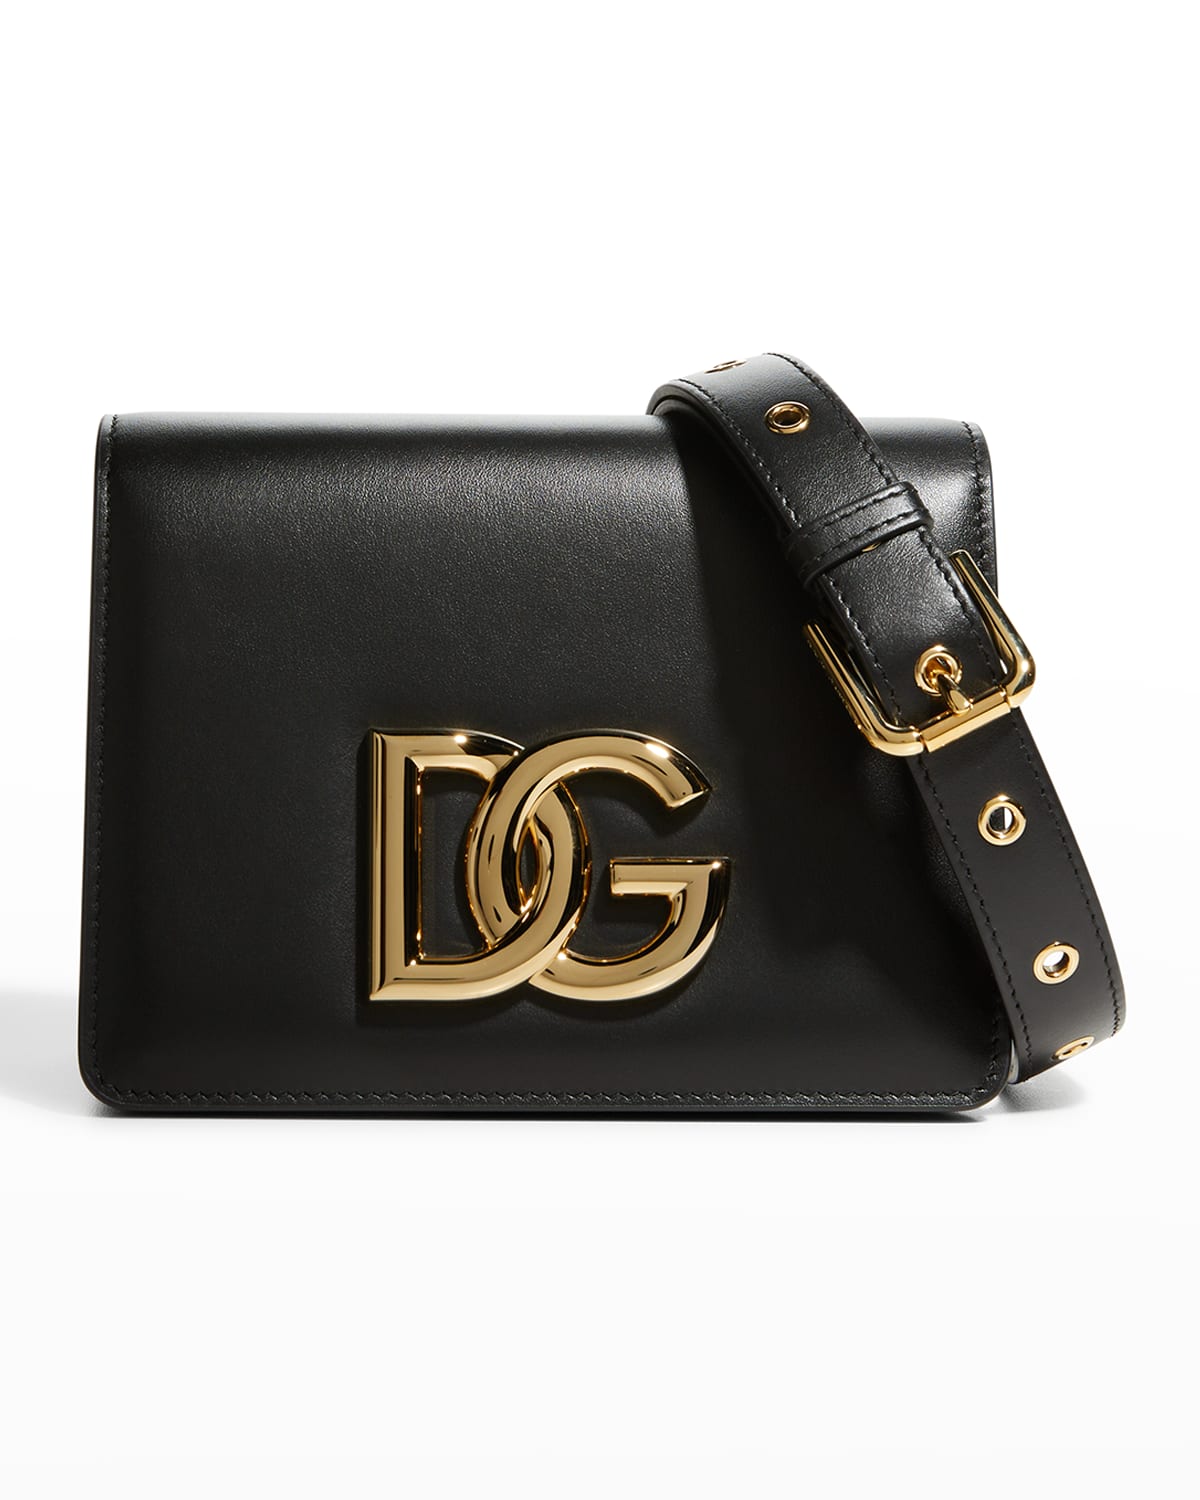 Dolce&Gabbana DG Logo Zip Leather Clutch Bag | Neiman Marcus